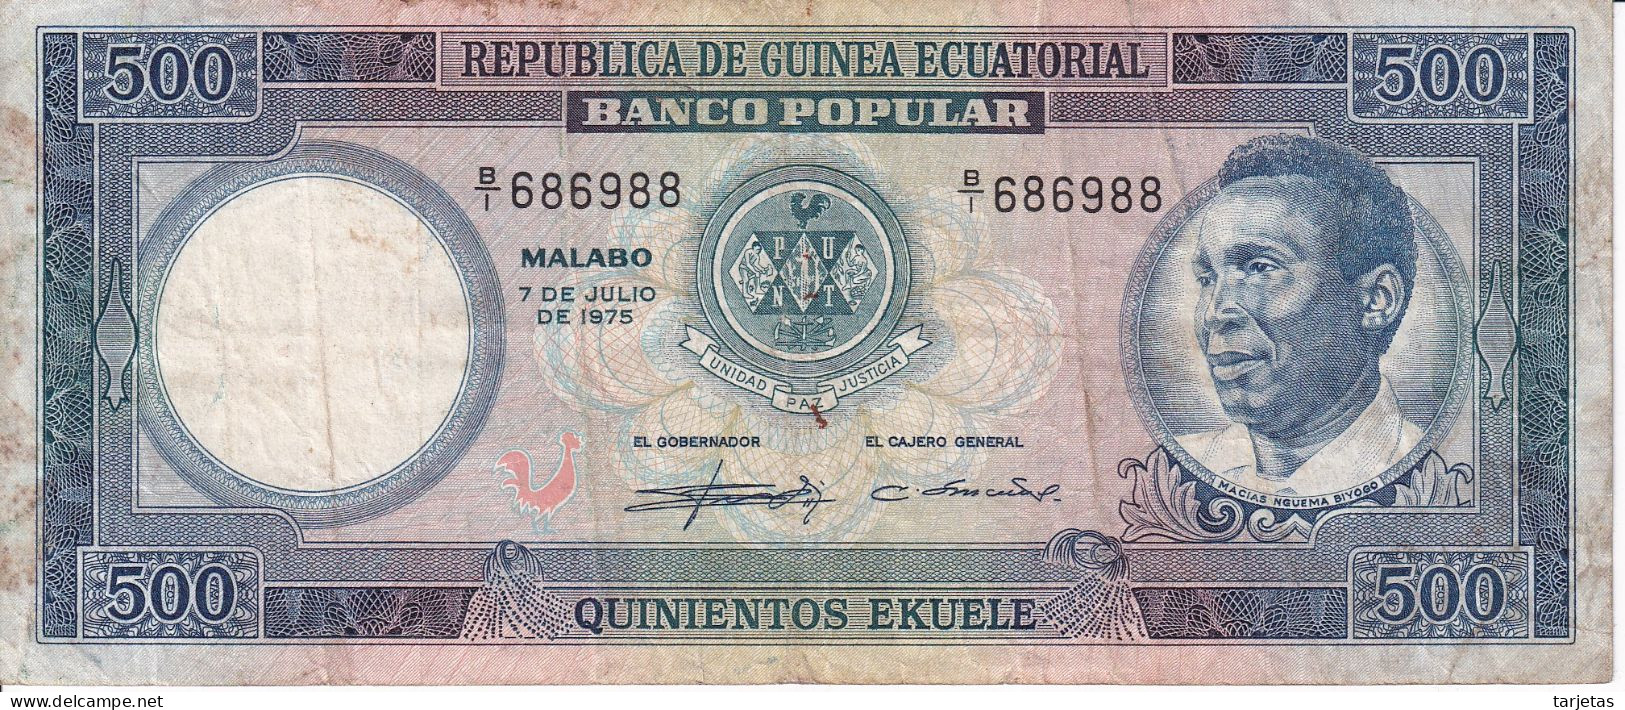 BILLETE DE GUINEA ECUATORIAL DE 500 EKUELE DEL AÑO 1975  (BANKNOTE) - Equatorial Guinea